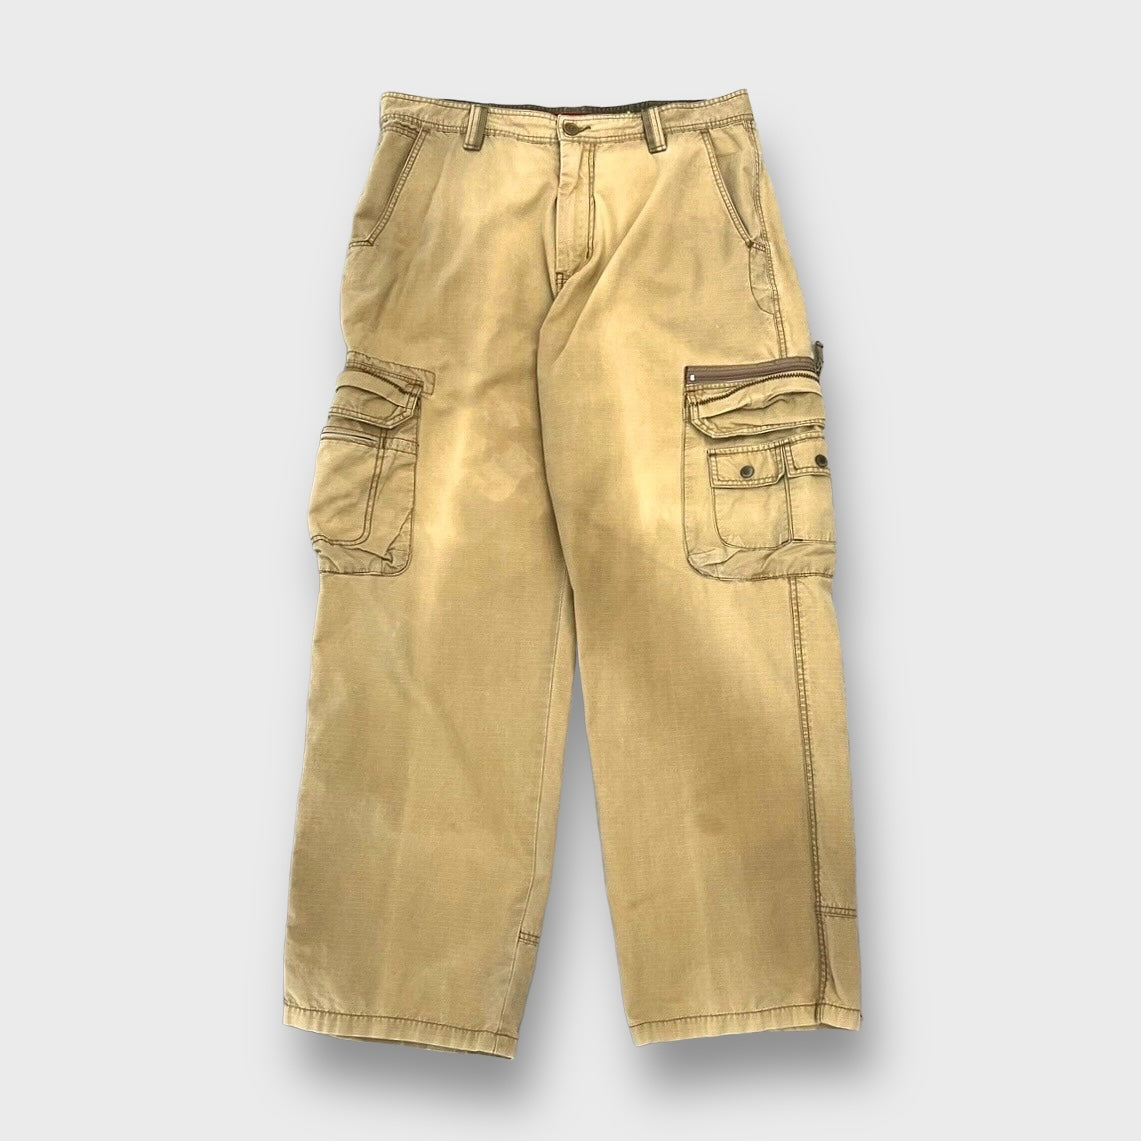 90's UNION BAY cargo pants